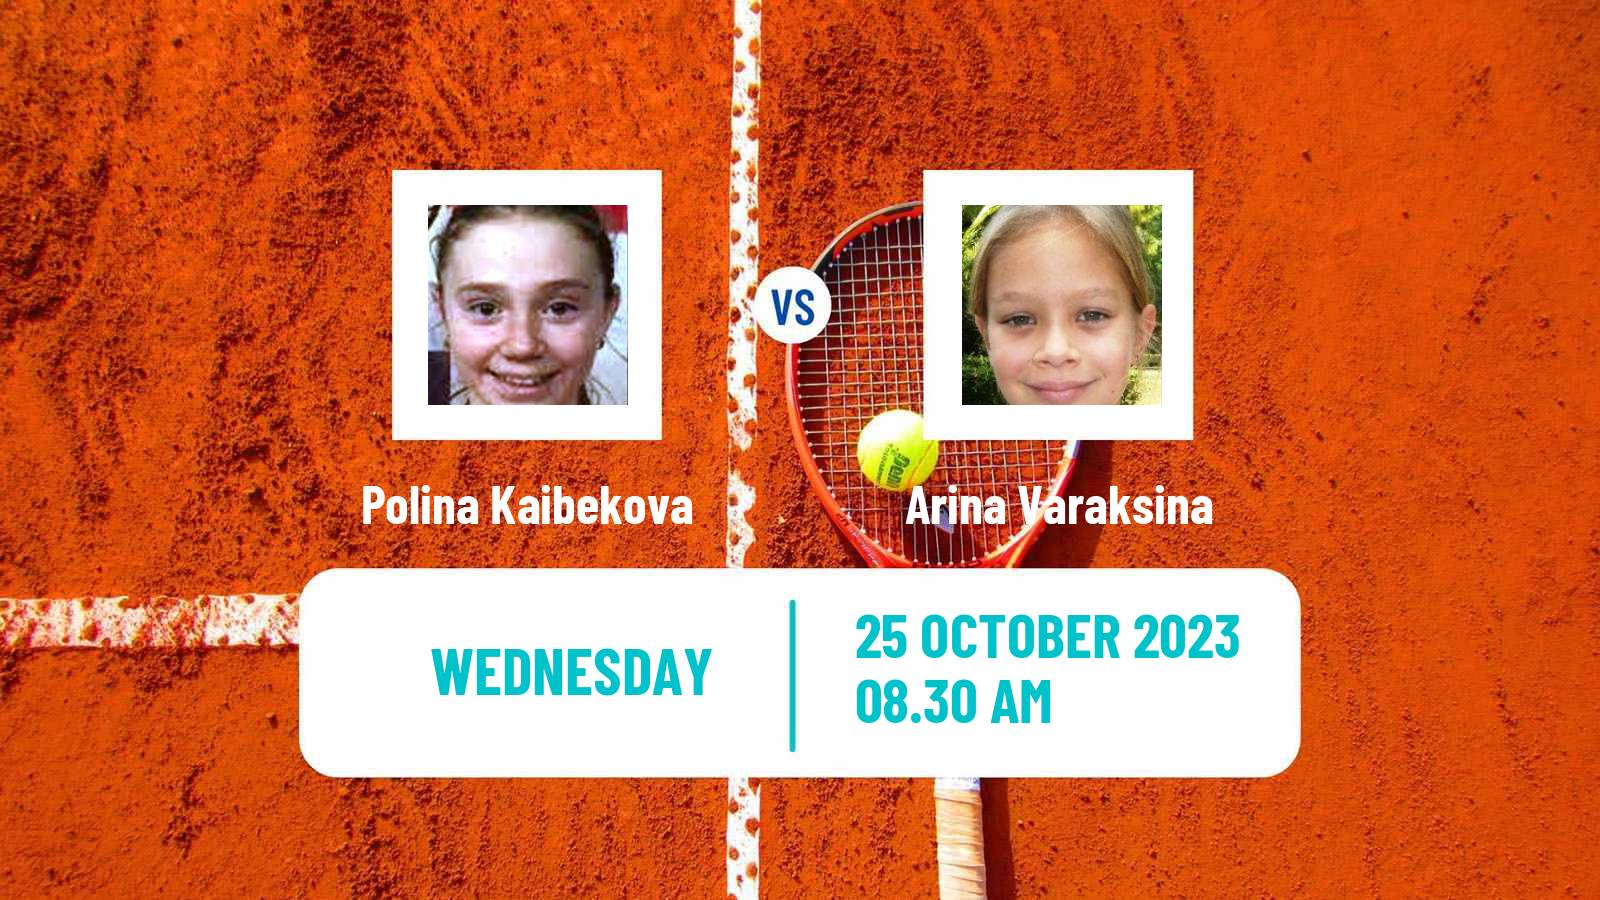 Tennis ITF W15 Monastir 38 Women Polina Kaibekova - Arina Varaksina